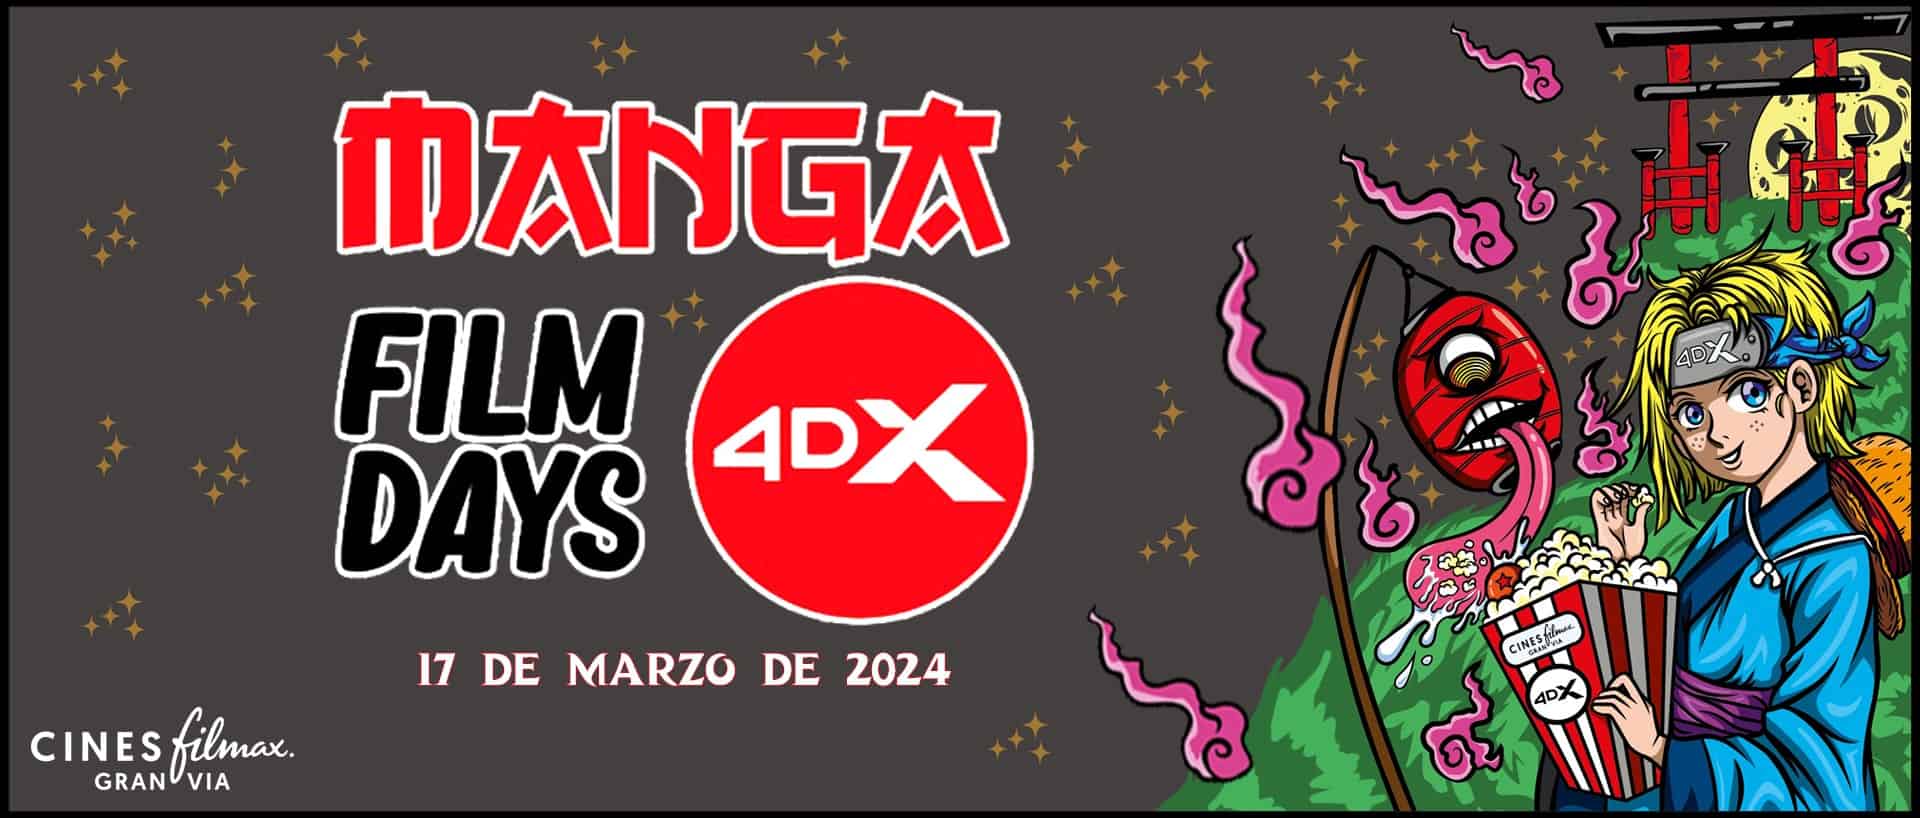 Manga Film Days 4DX Barcelona: immergetevi nel mondo degli anime come mai prima d'ora!